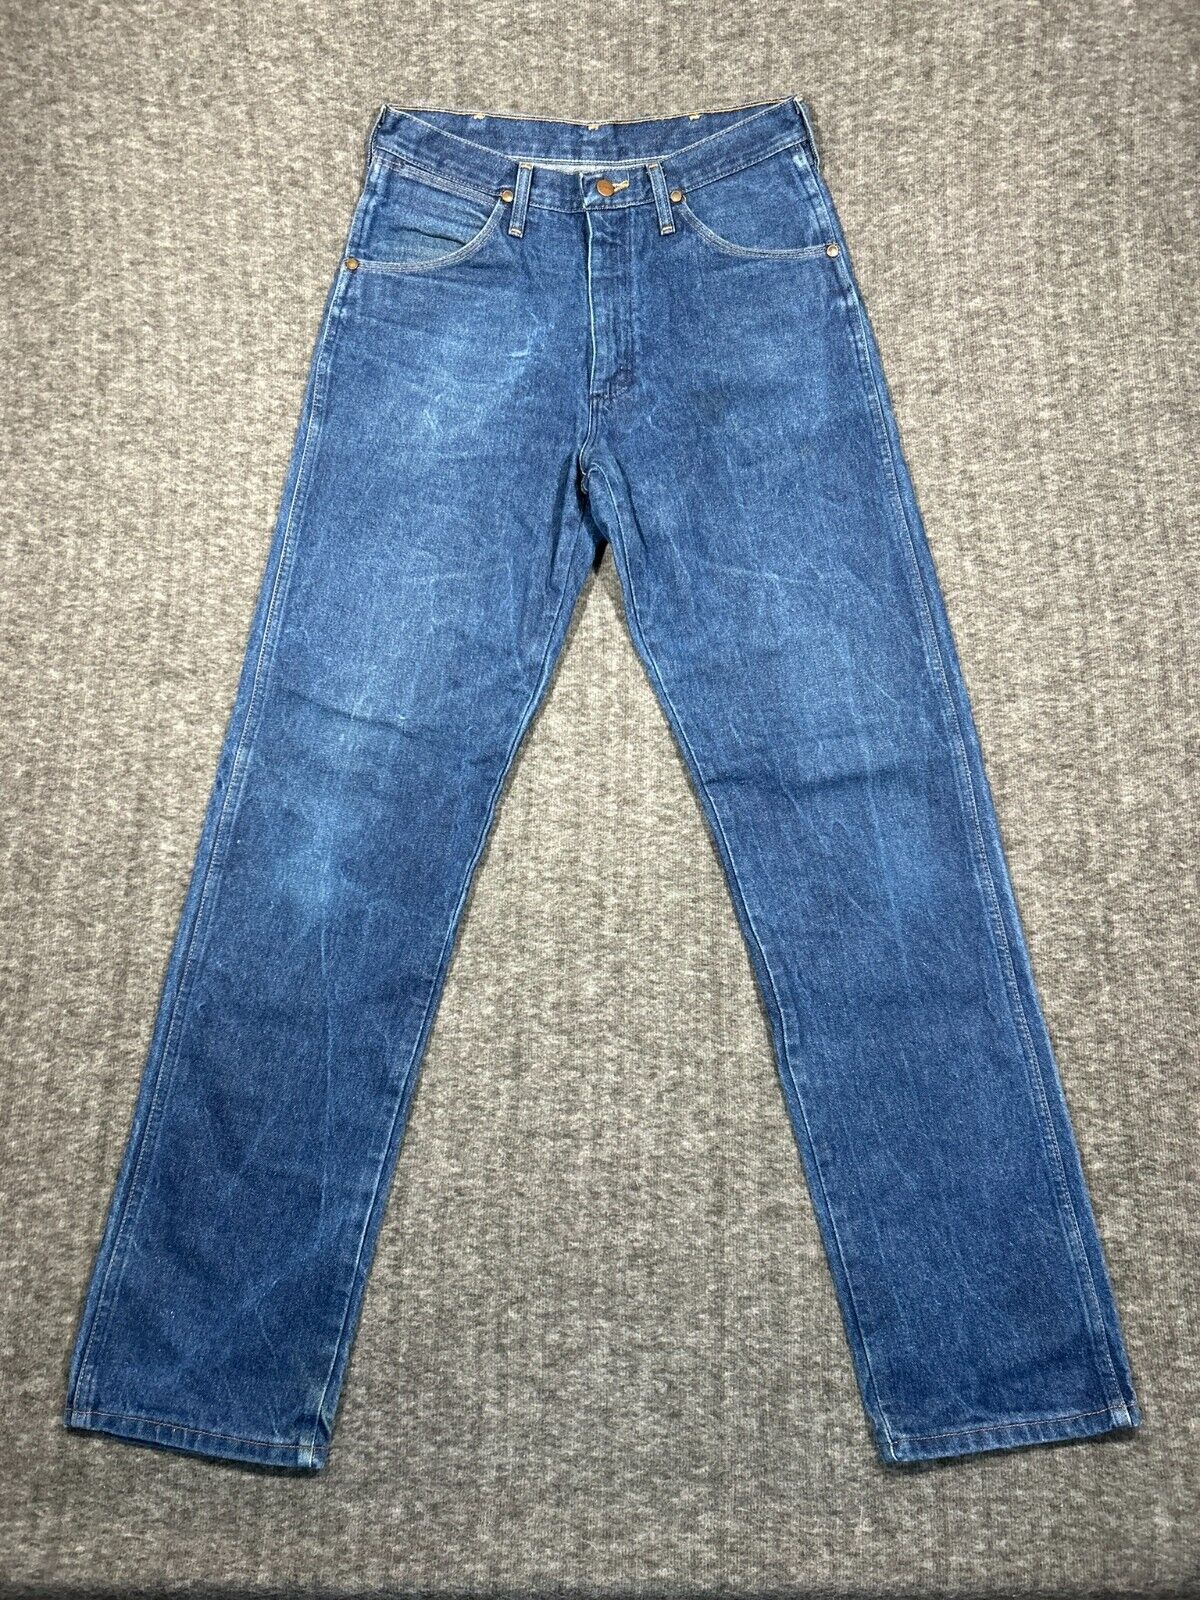 Vintage 80s Cowboy Cut Wrangler Jeans Mens 32x33 Made in USA Rigid Denim 31MWZ